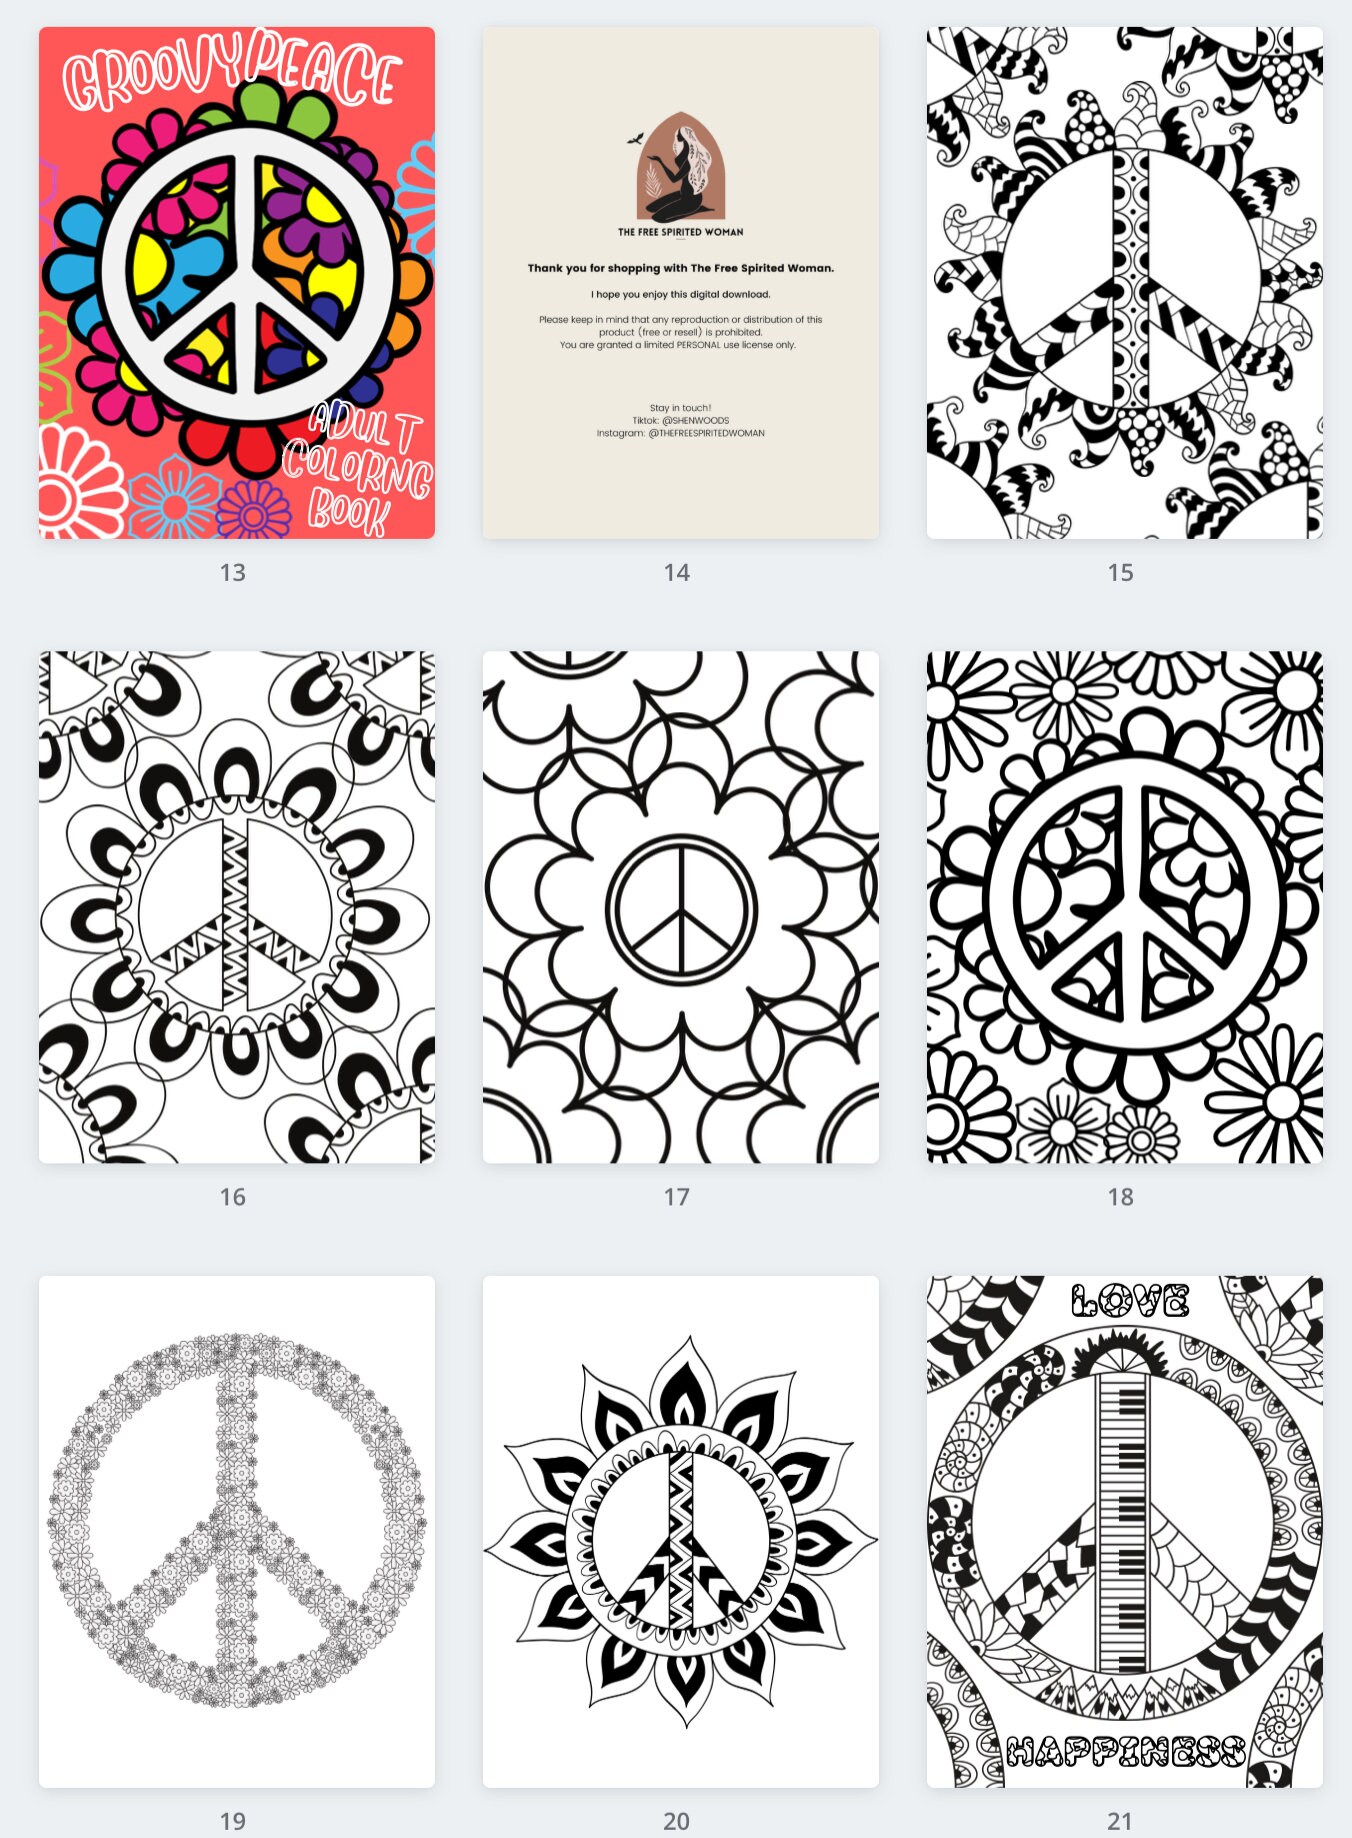 Zenspirations ® Coloring Book: Color Peace - Zenspirations